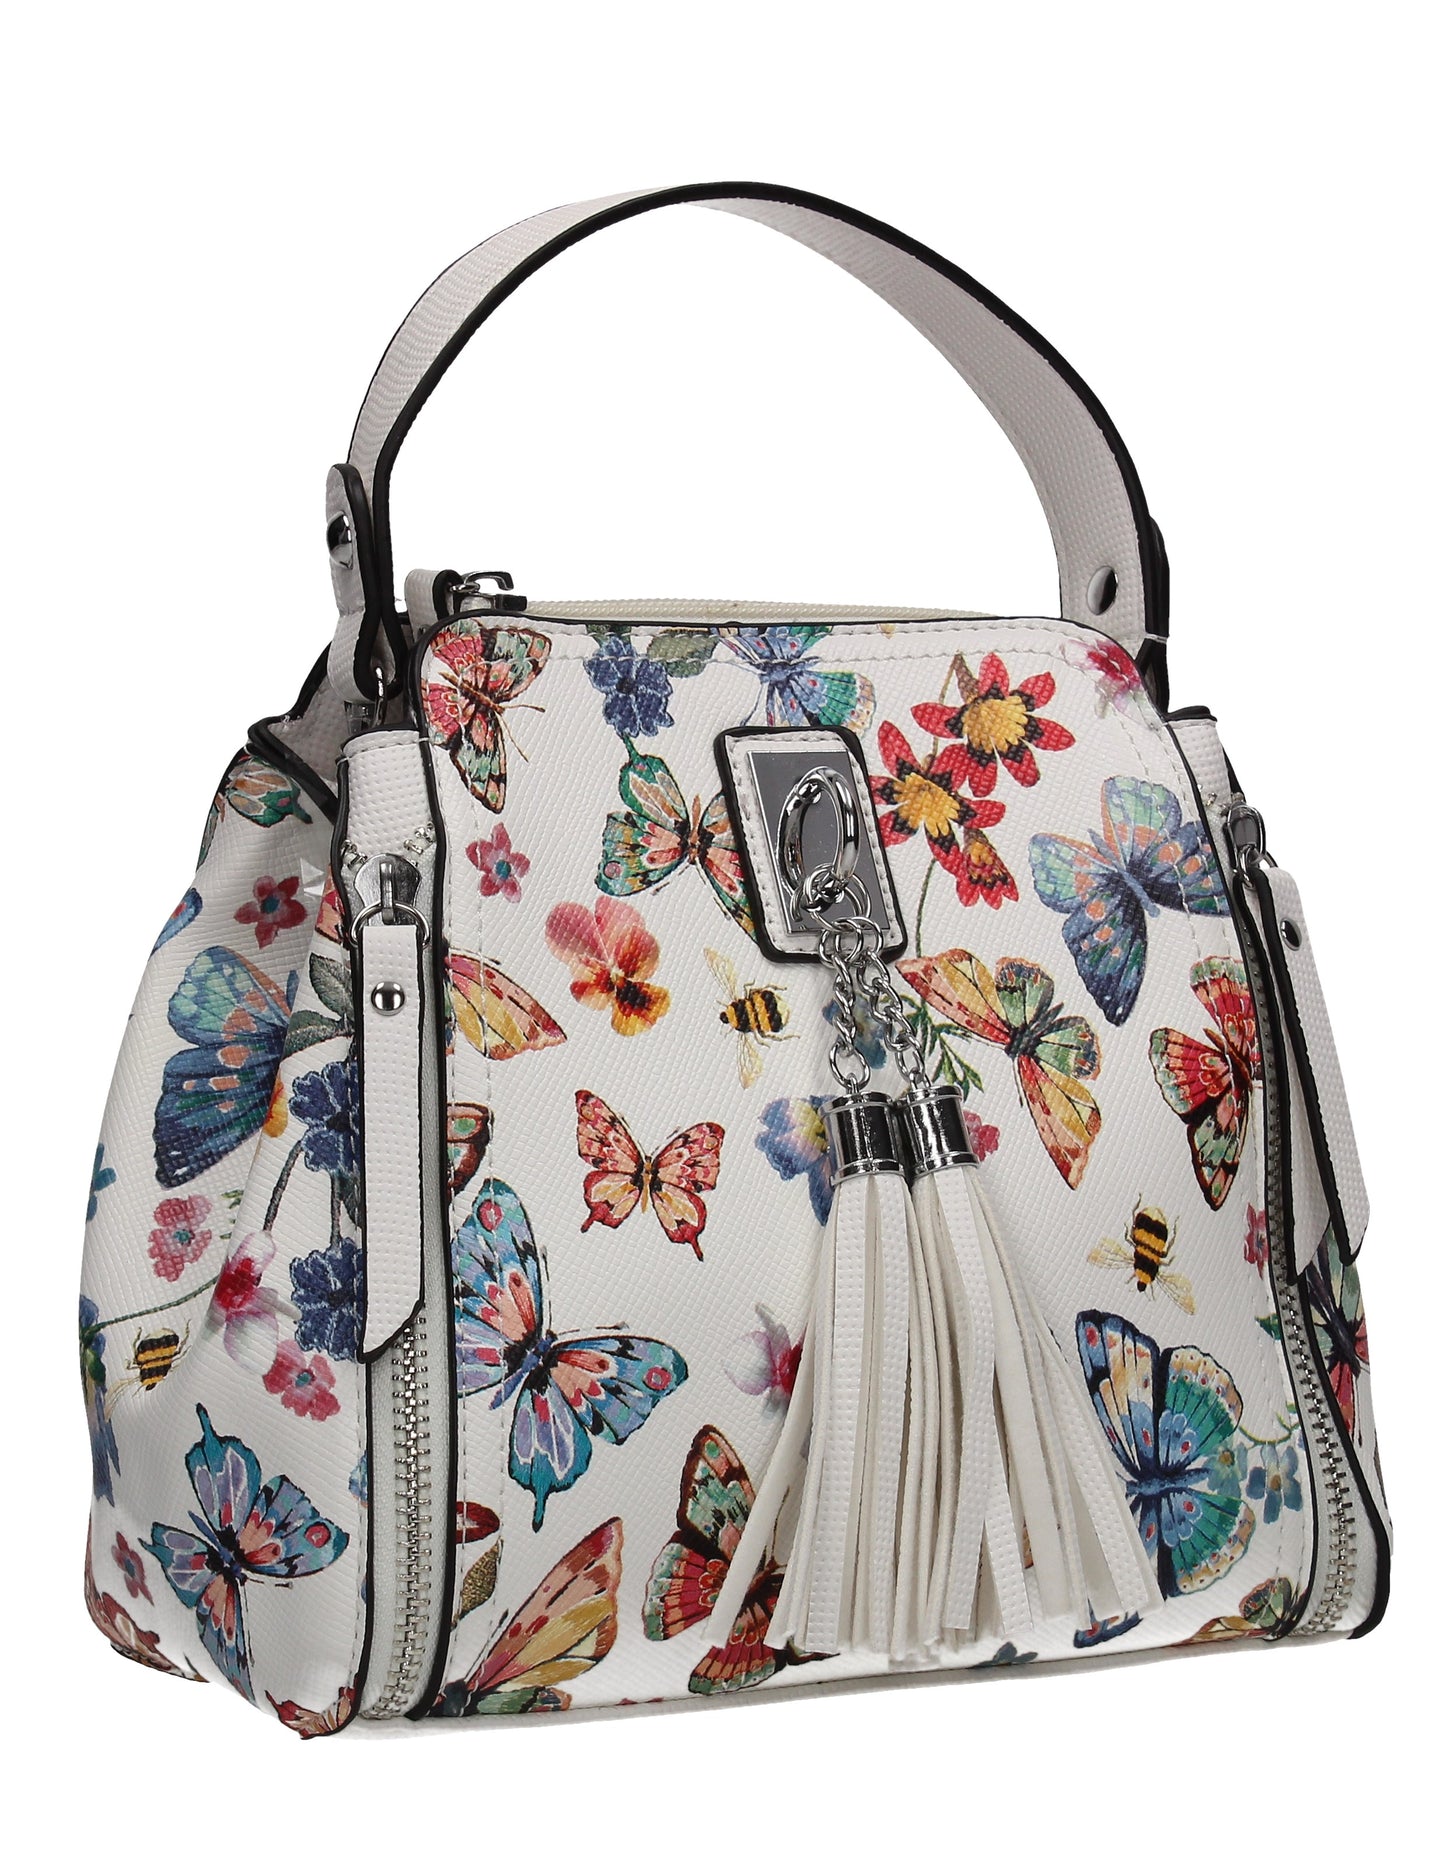 Anita Butterfly Handbag WhiteBeautiful Cute Animal Faux Leather Clutch Bag Handles Strap Summer School